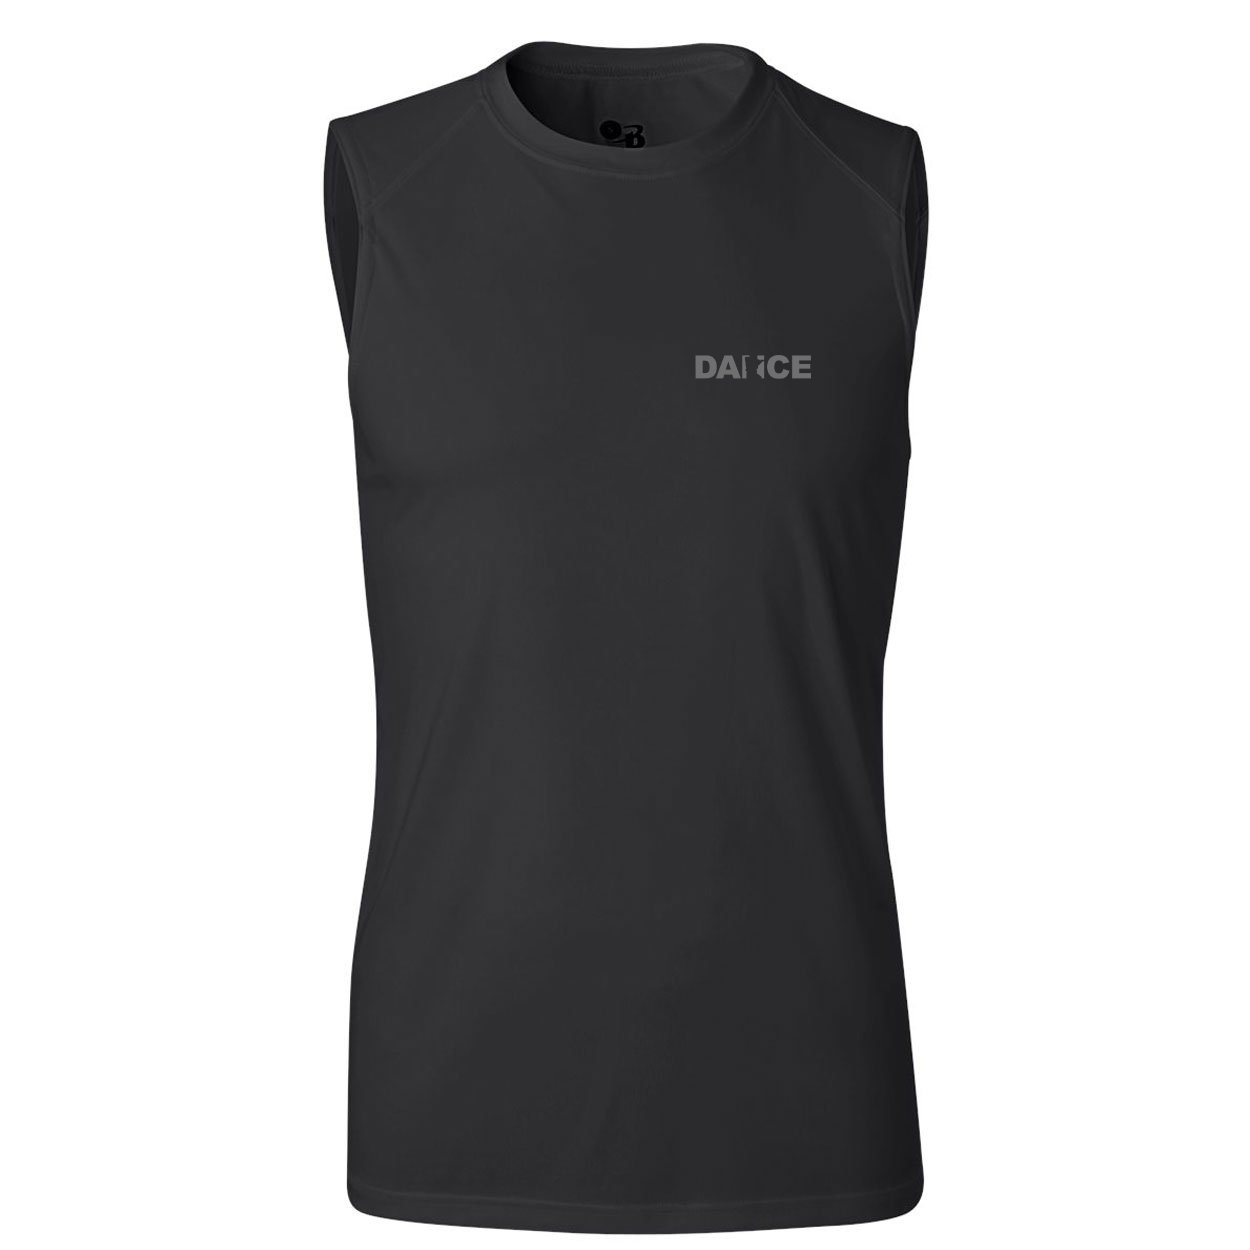 Dance Minnesota Night Out Unisex Performance Sleeveless T-Shirt Black (Gray Logo)